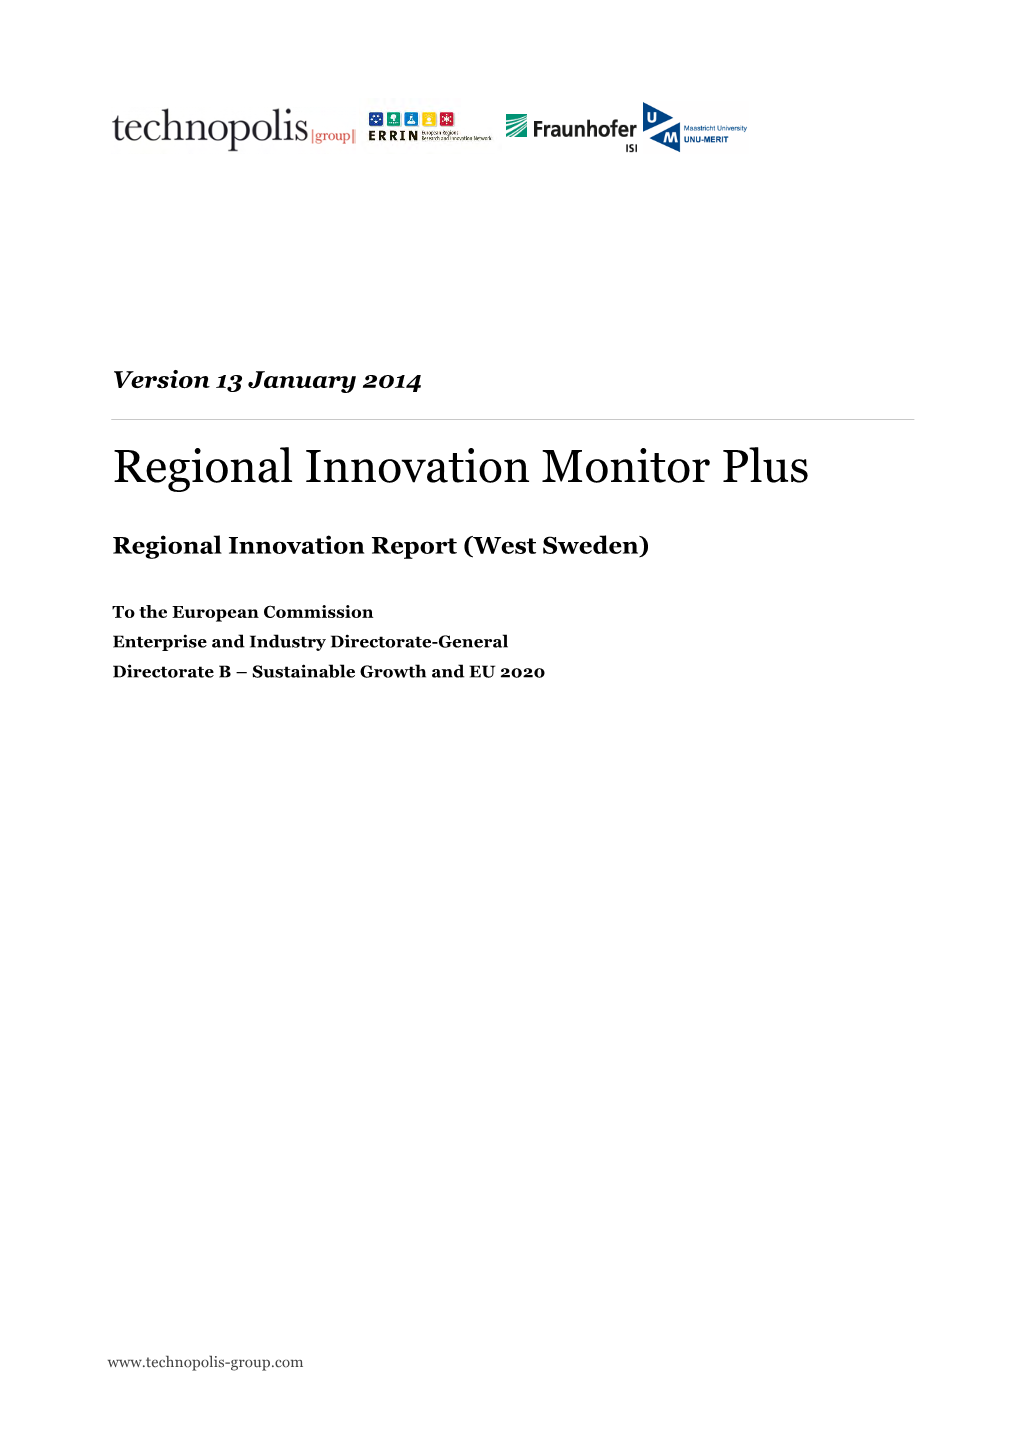 Regional Innovation Monitor Plus